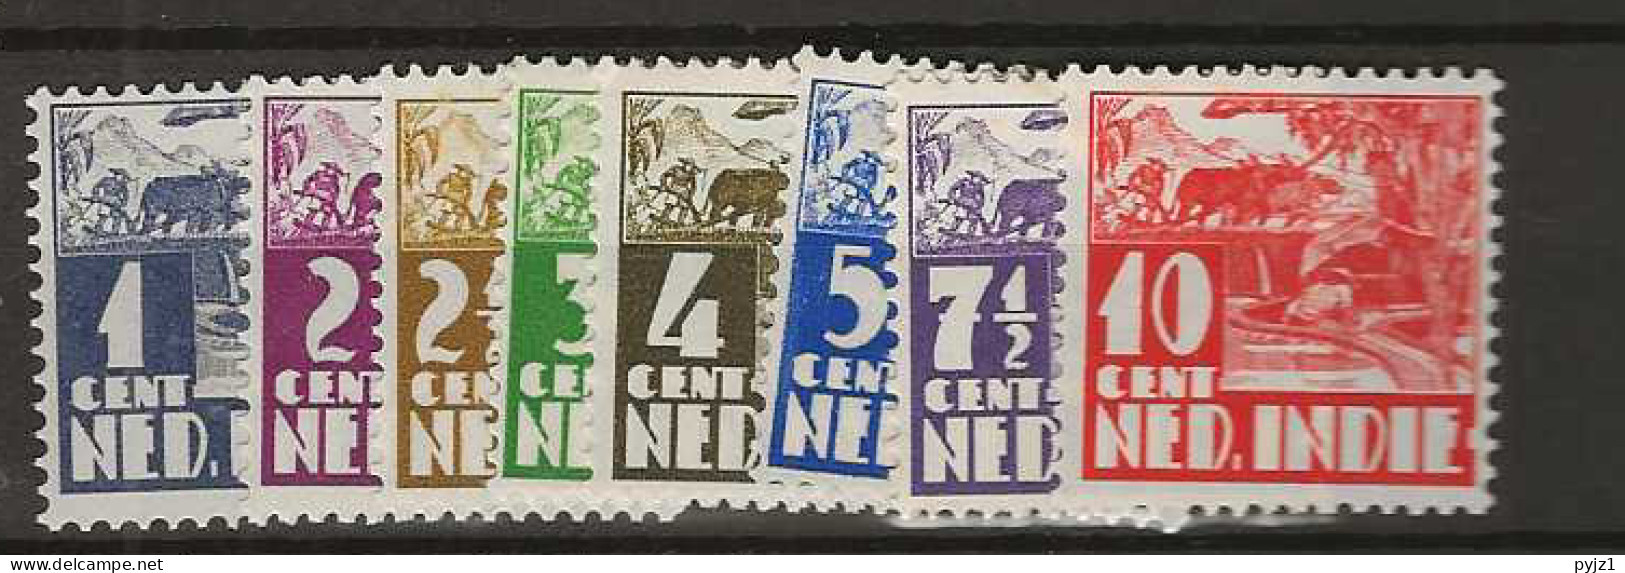 1934 MH Nederlands Indië  NVPH 186-194 No Watermark - Netherlands Indies